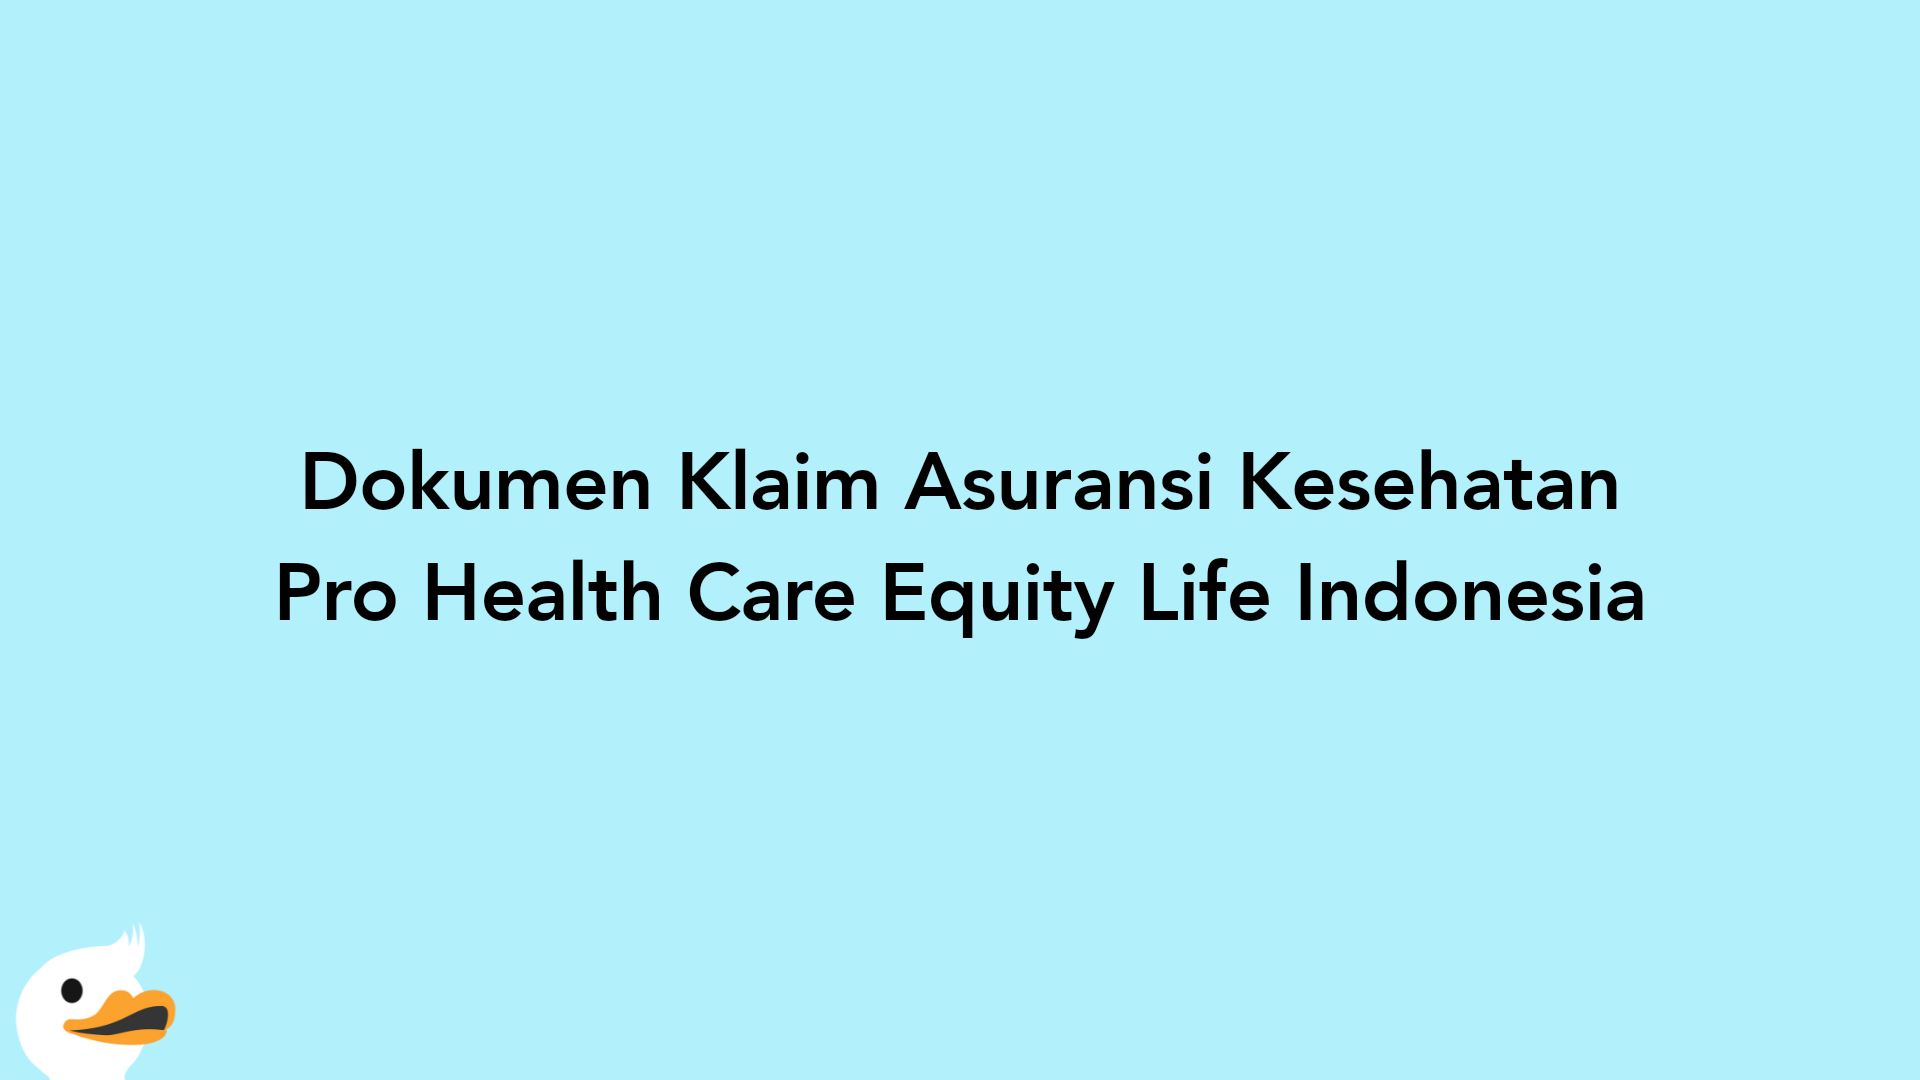 Dokumen Klaim Asuransi Kesehatan Pro Health Care Equity Life Indonesia